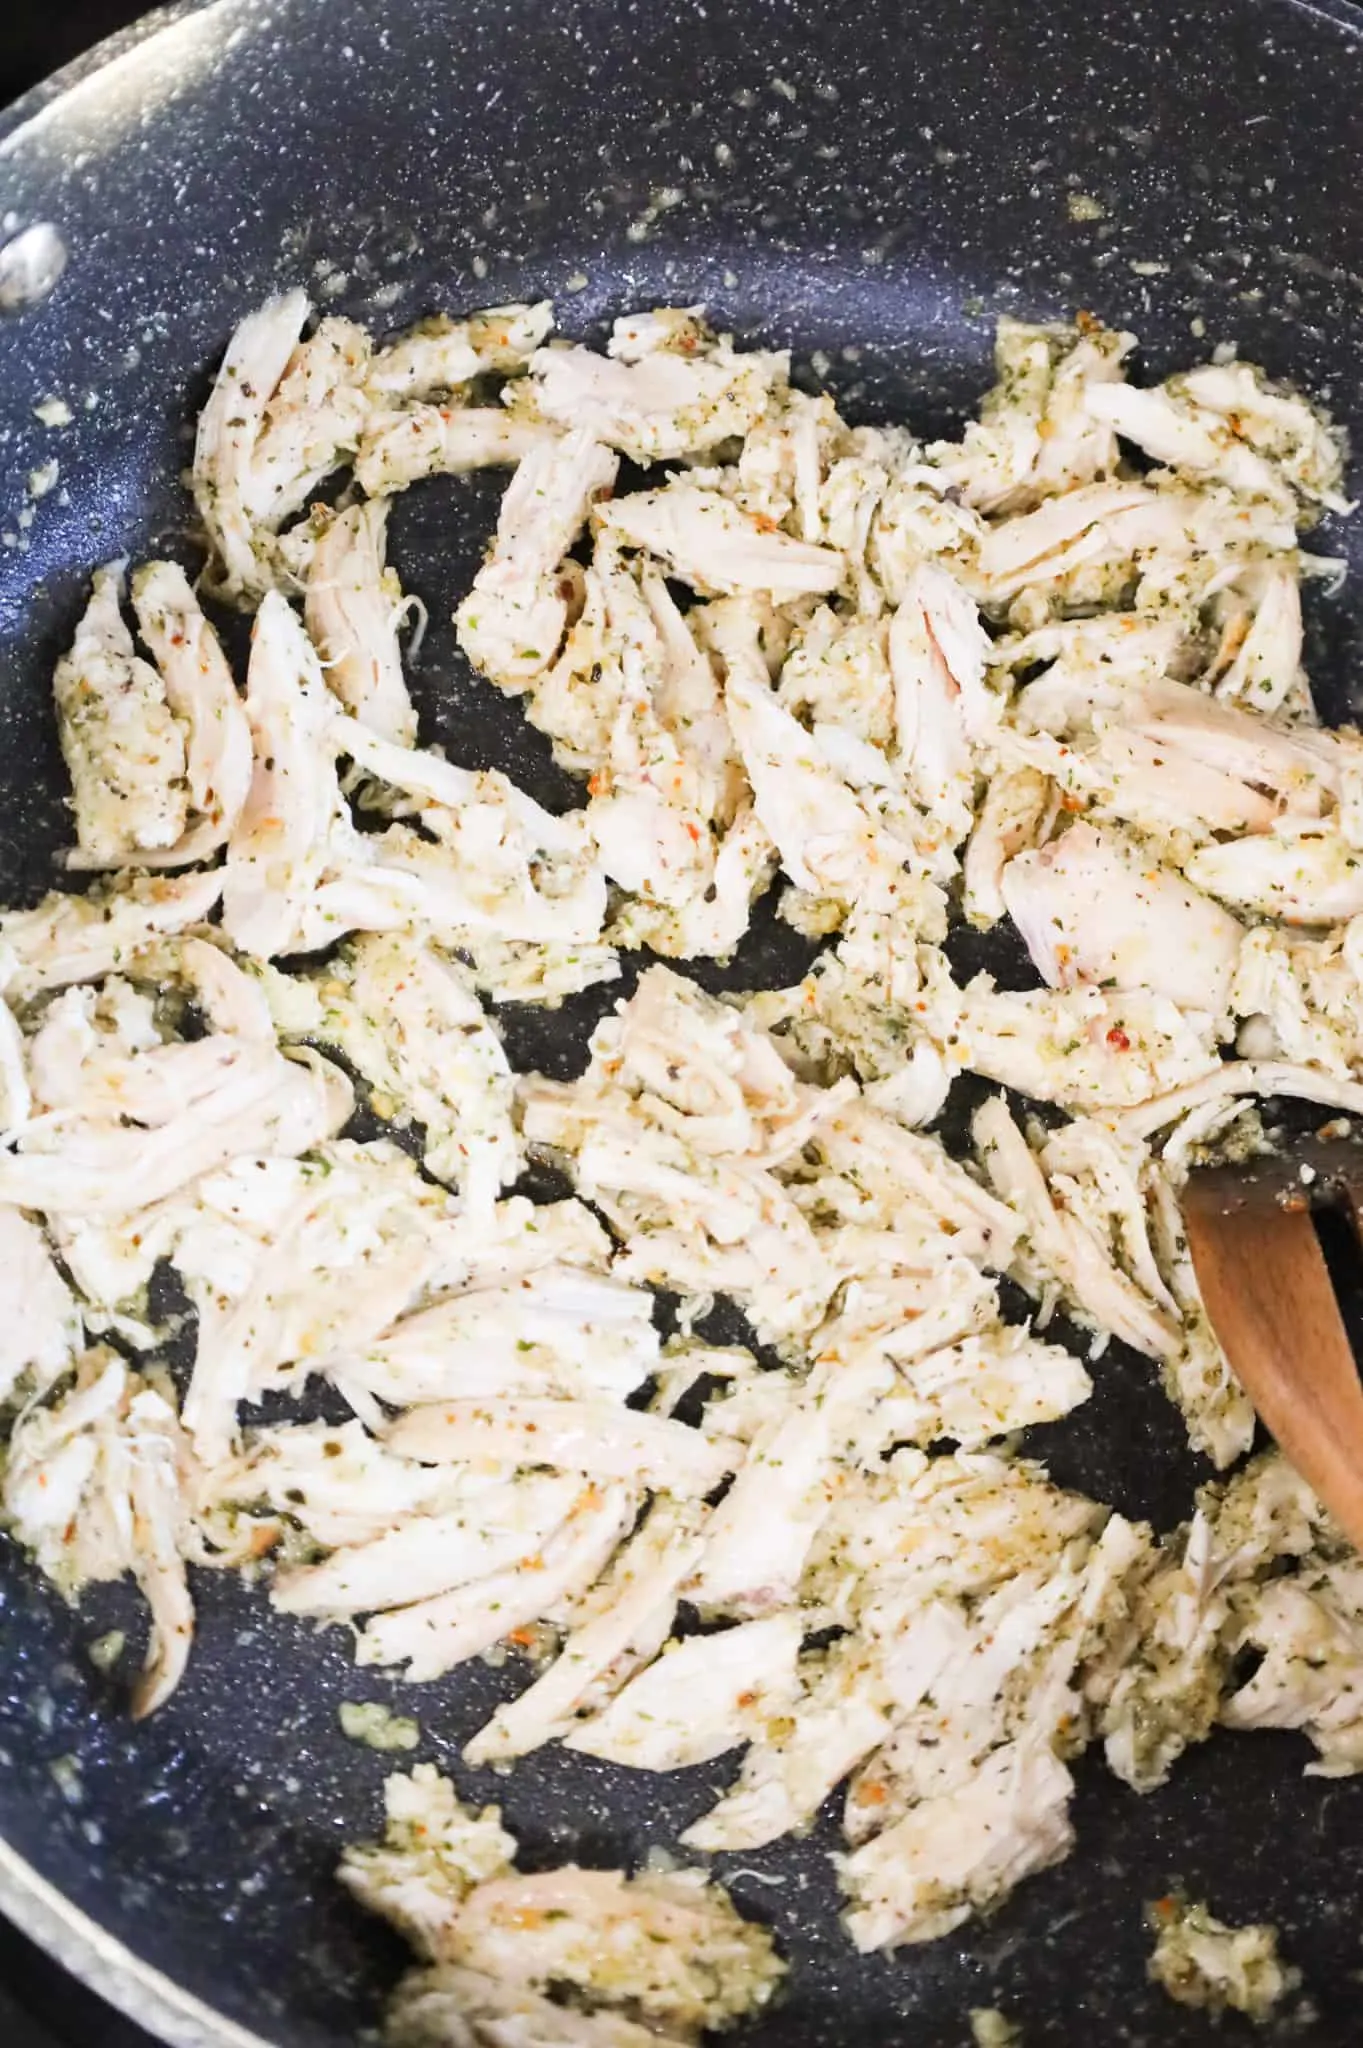 shredded chicken coated in Italian seasoning in a skillet